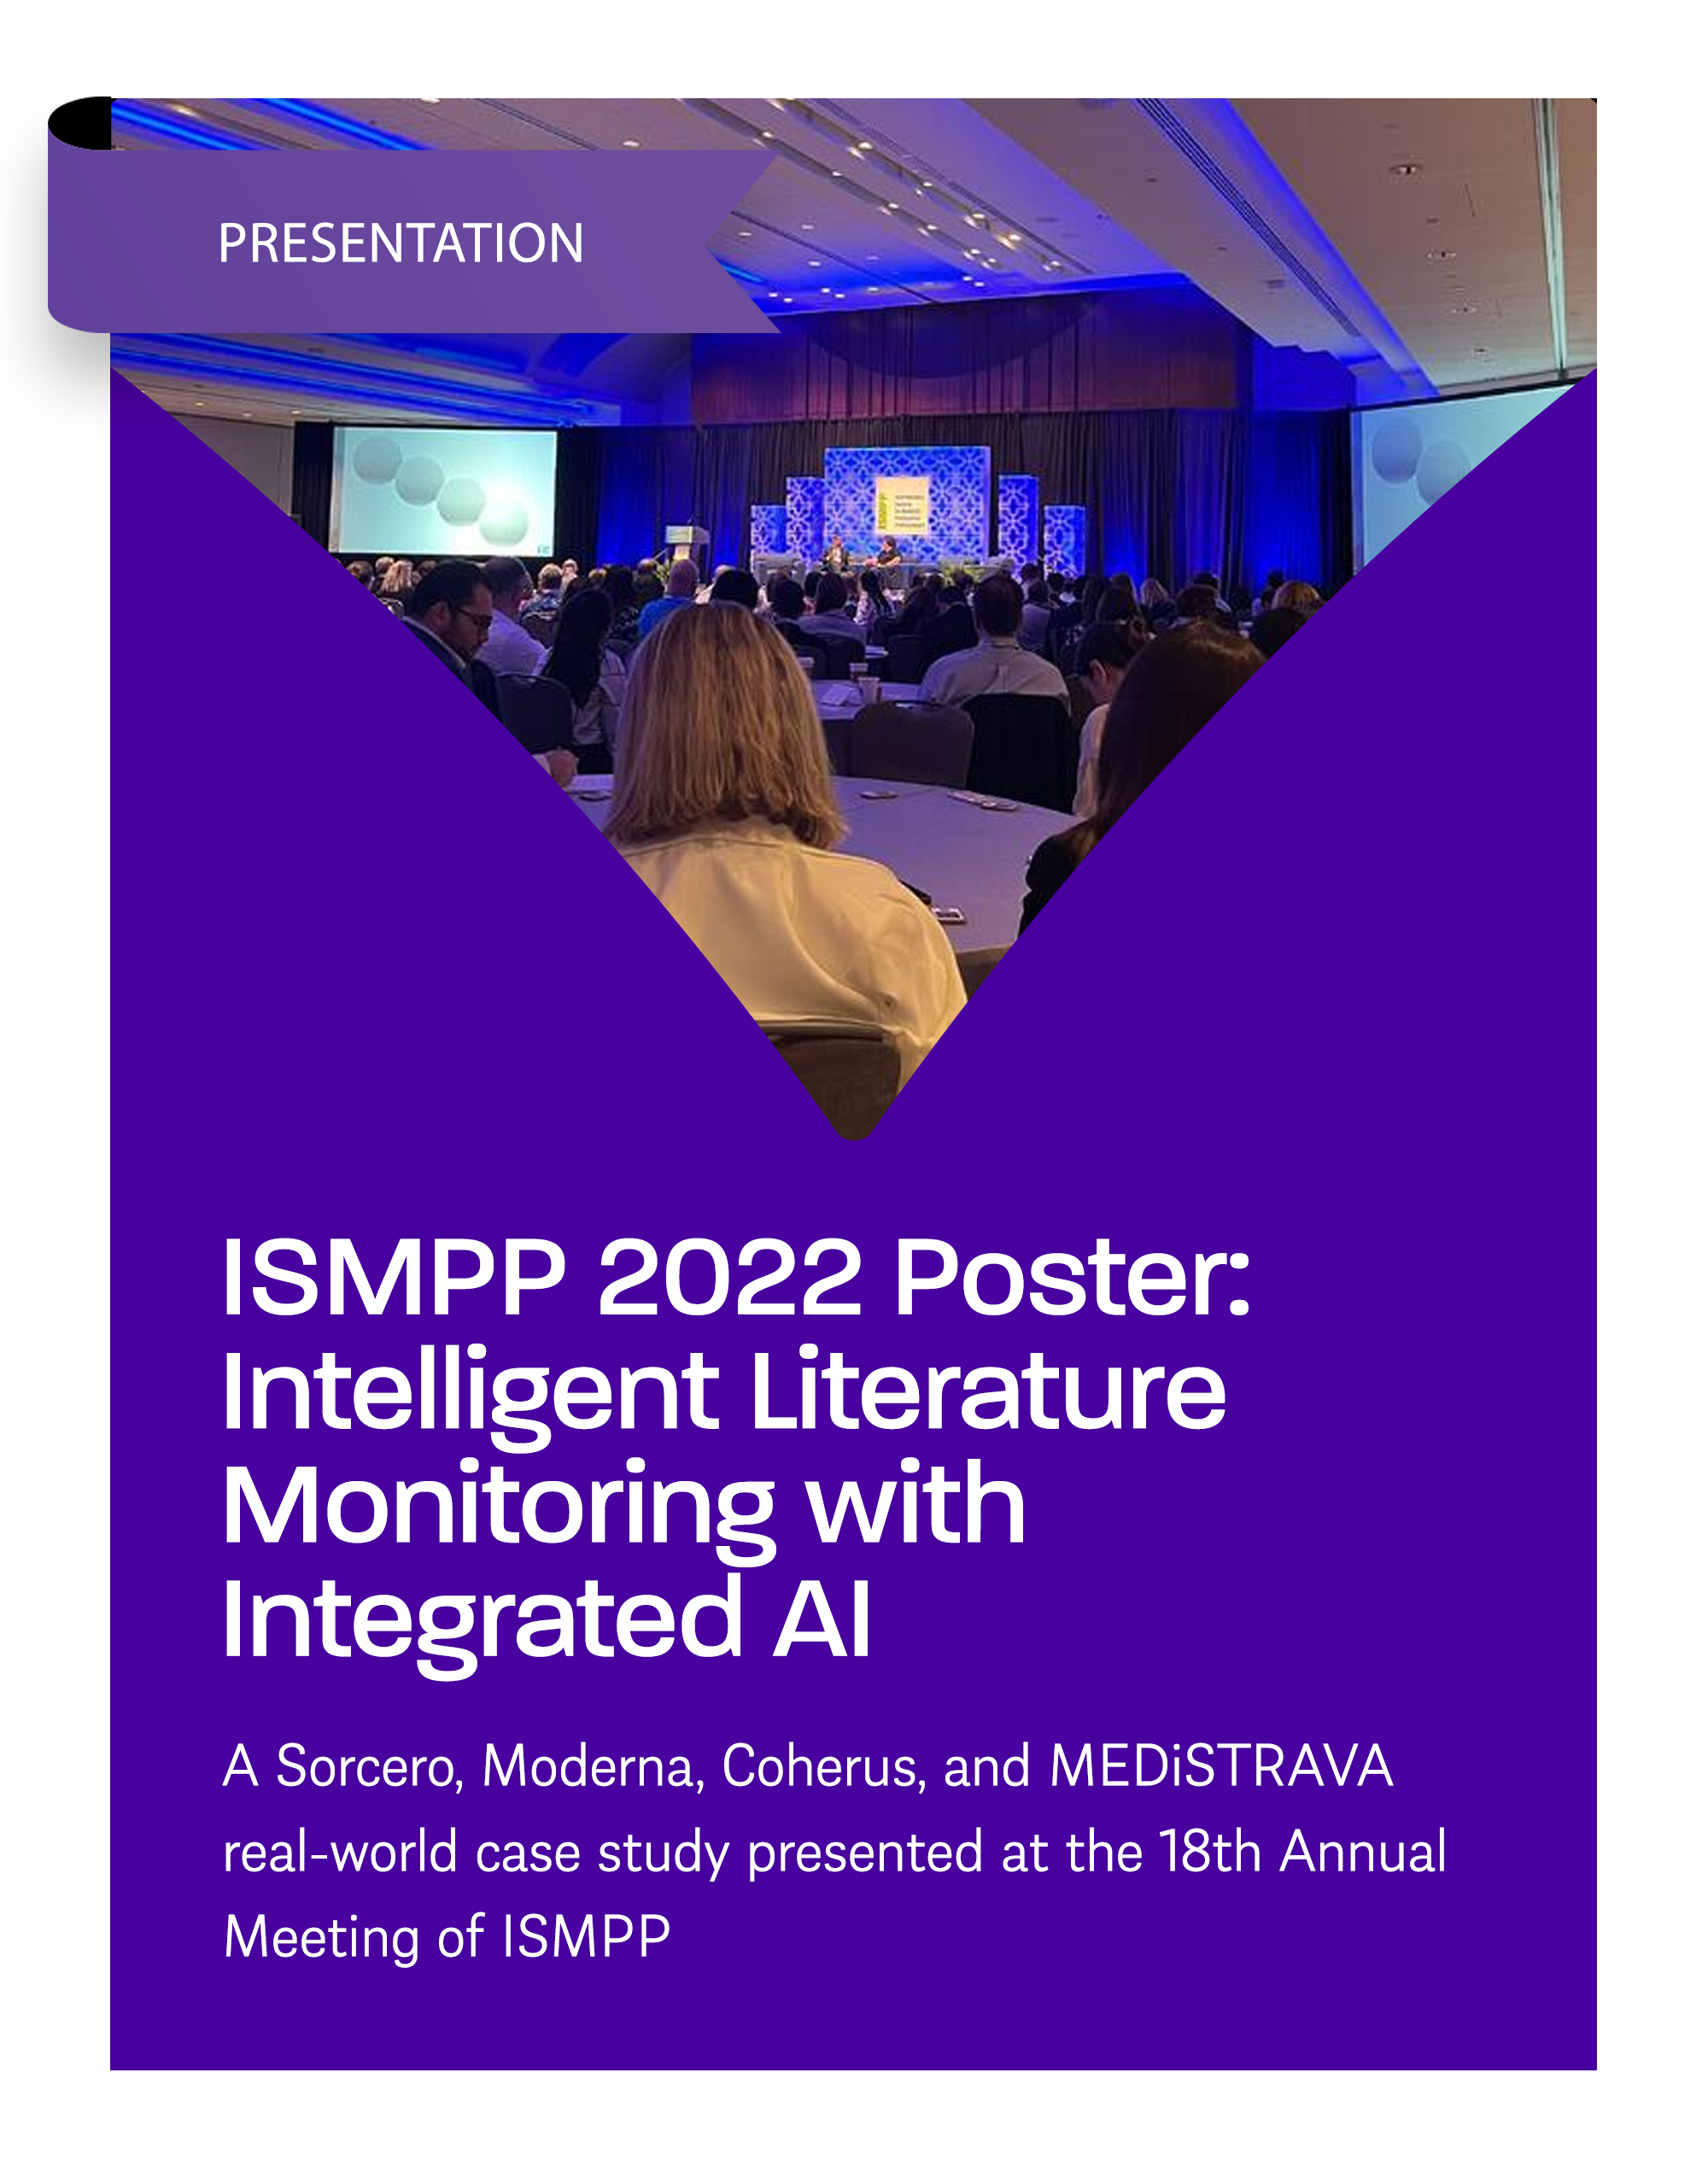 ISMPP Poster Presentation